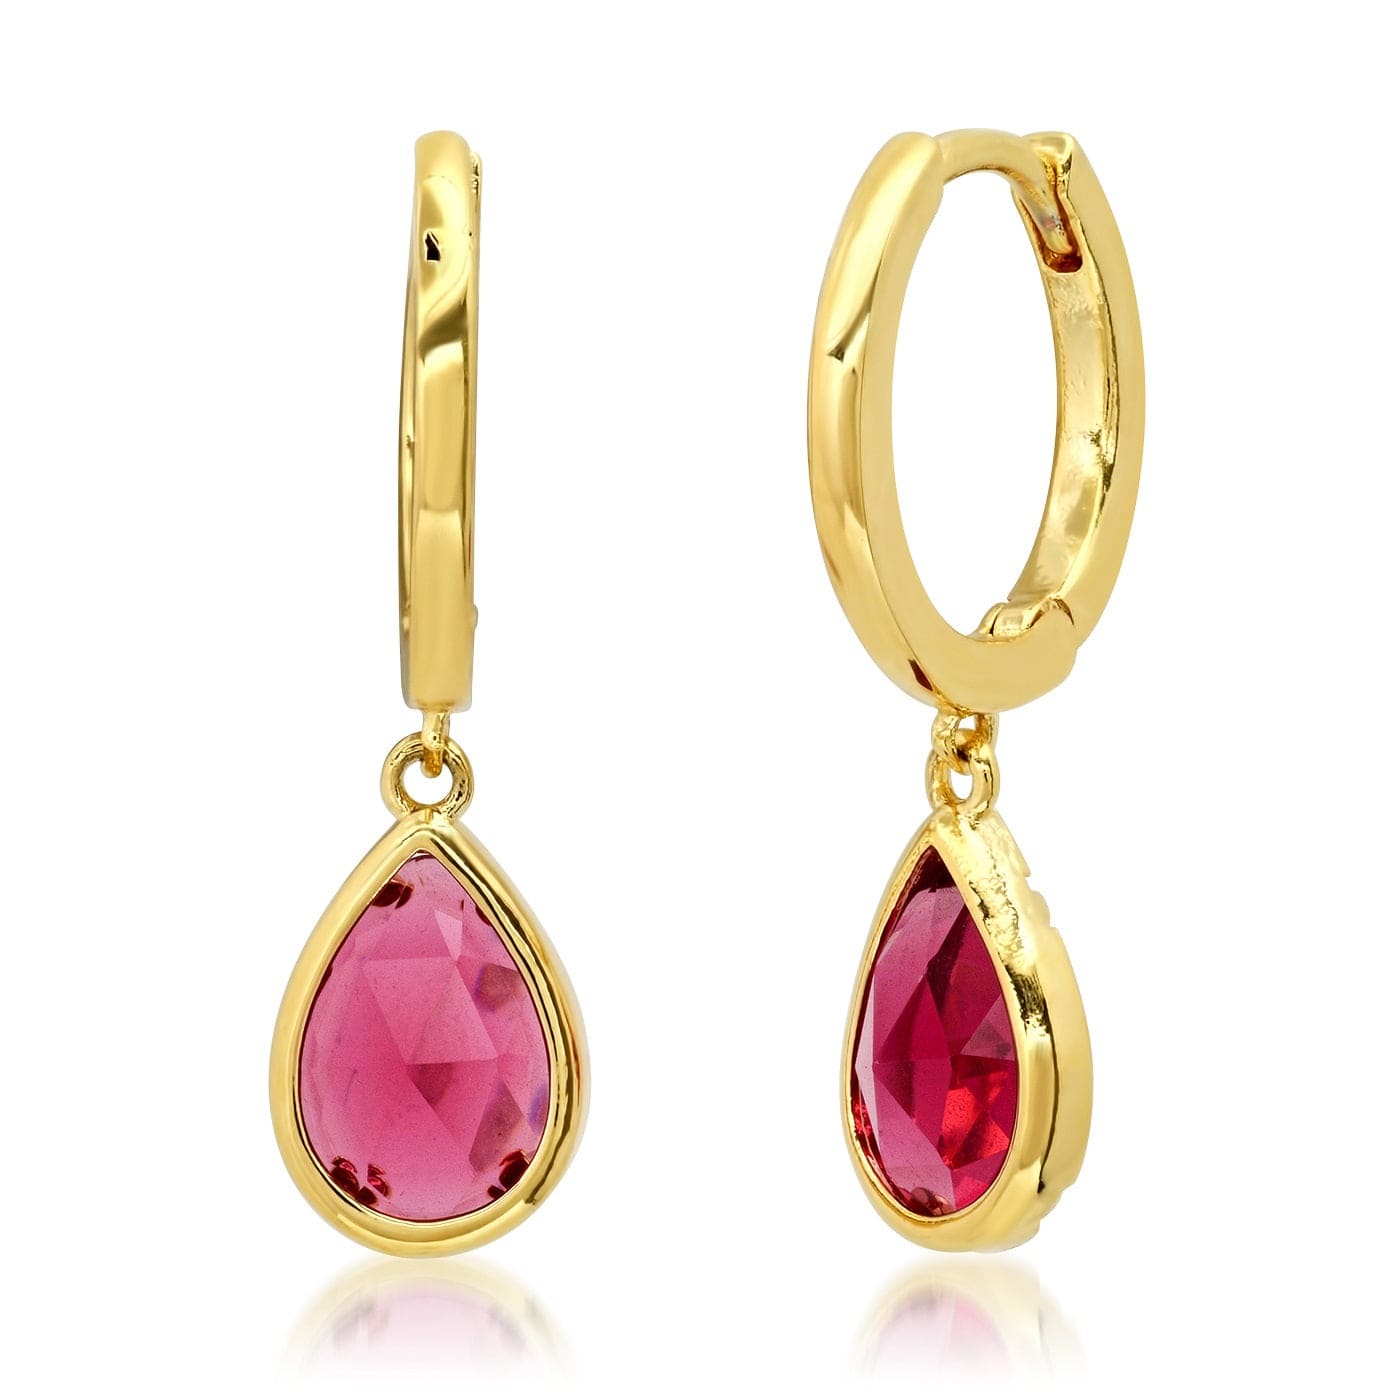 TAI JEWELRY Earrings Pink Huggie With Pear Shaped Charm